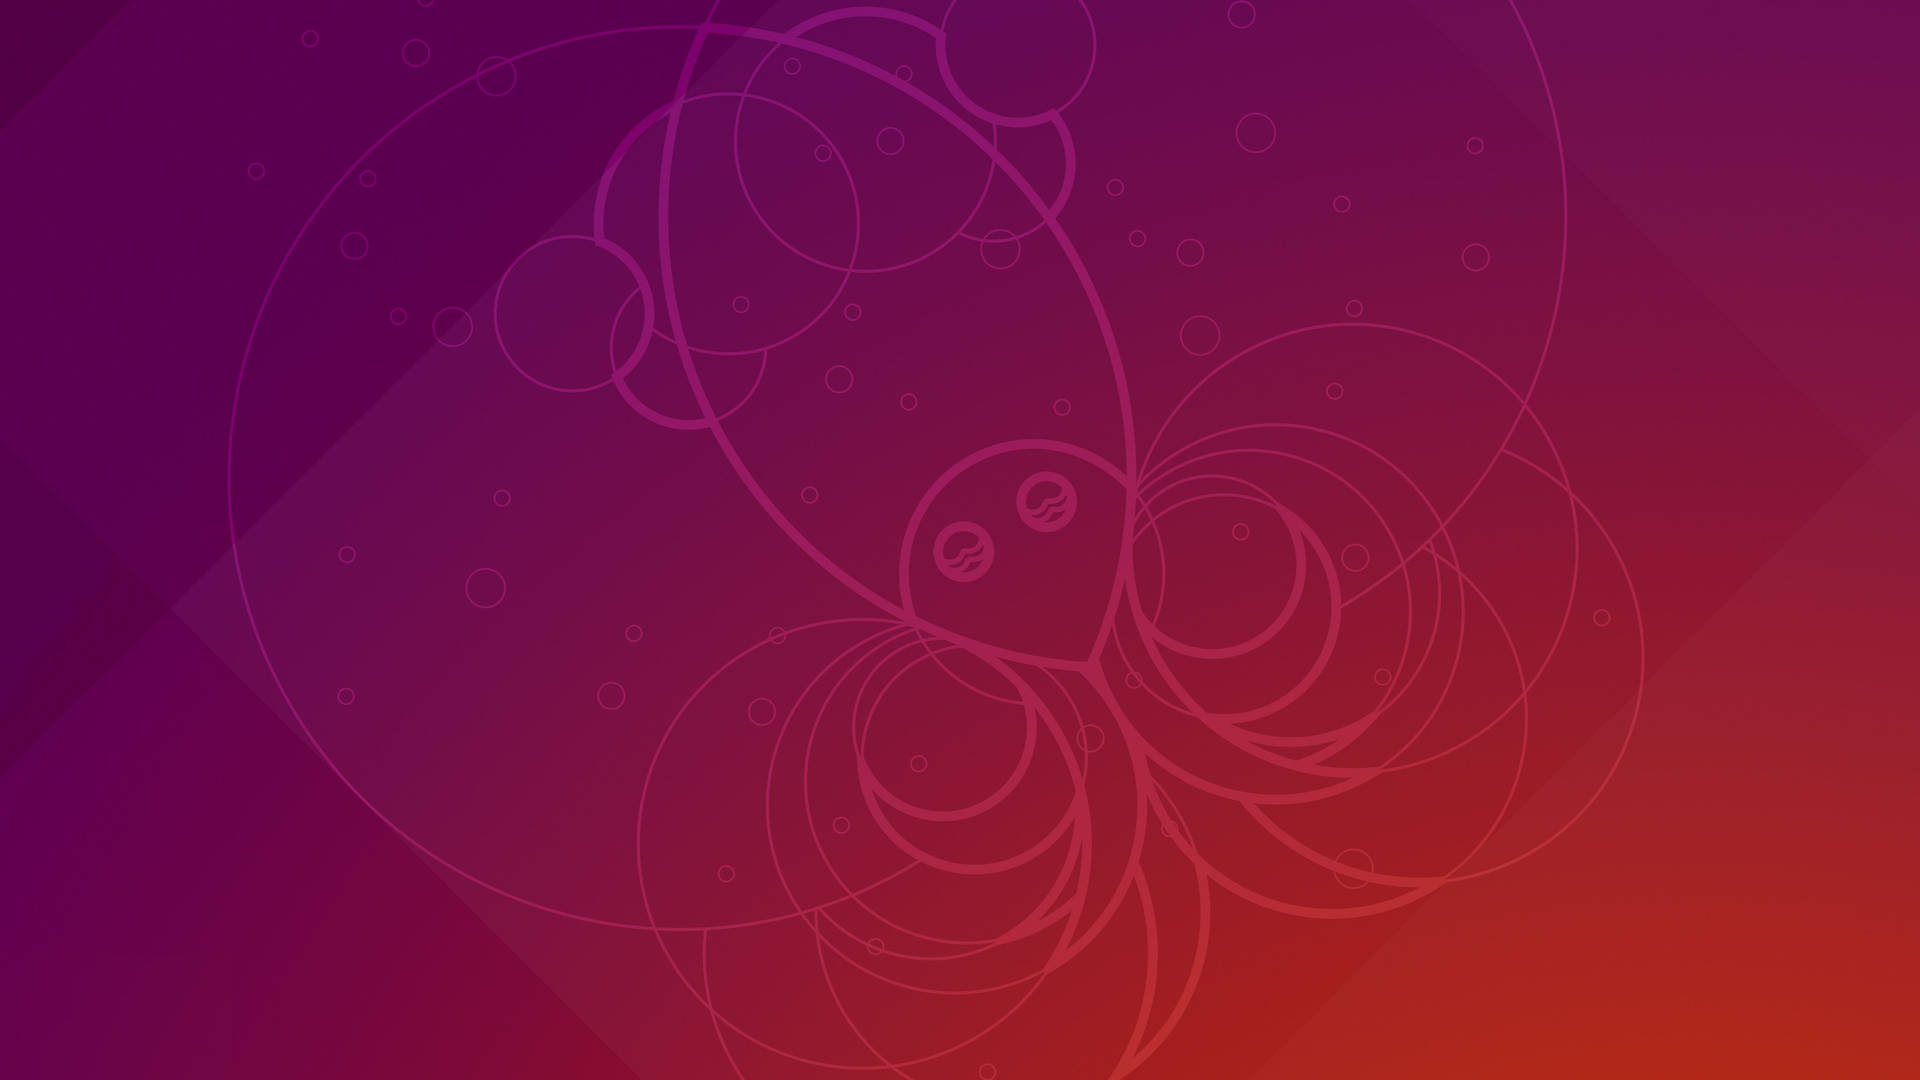 4096X2304 Ubuntu Wallpaper and Background